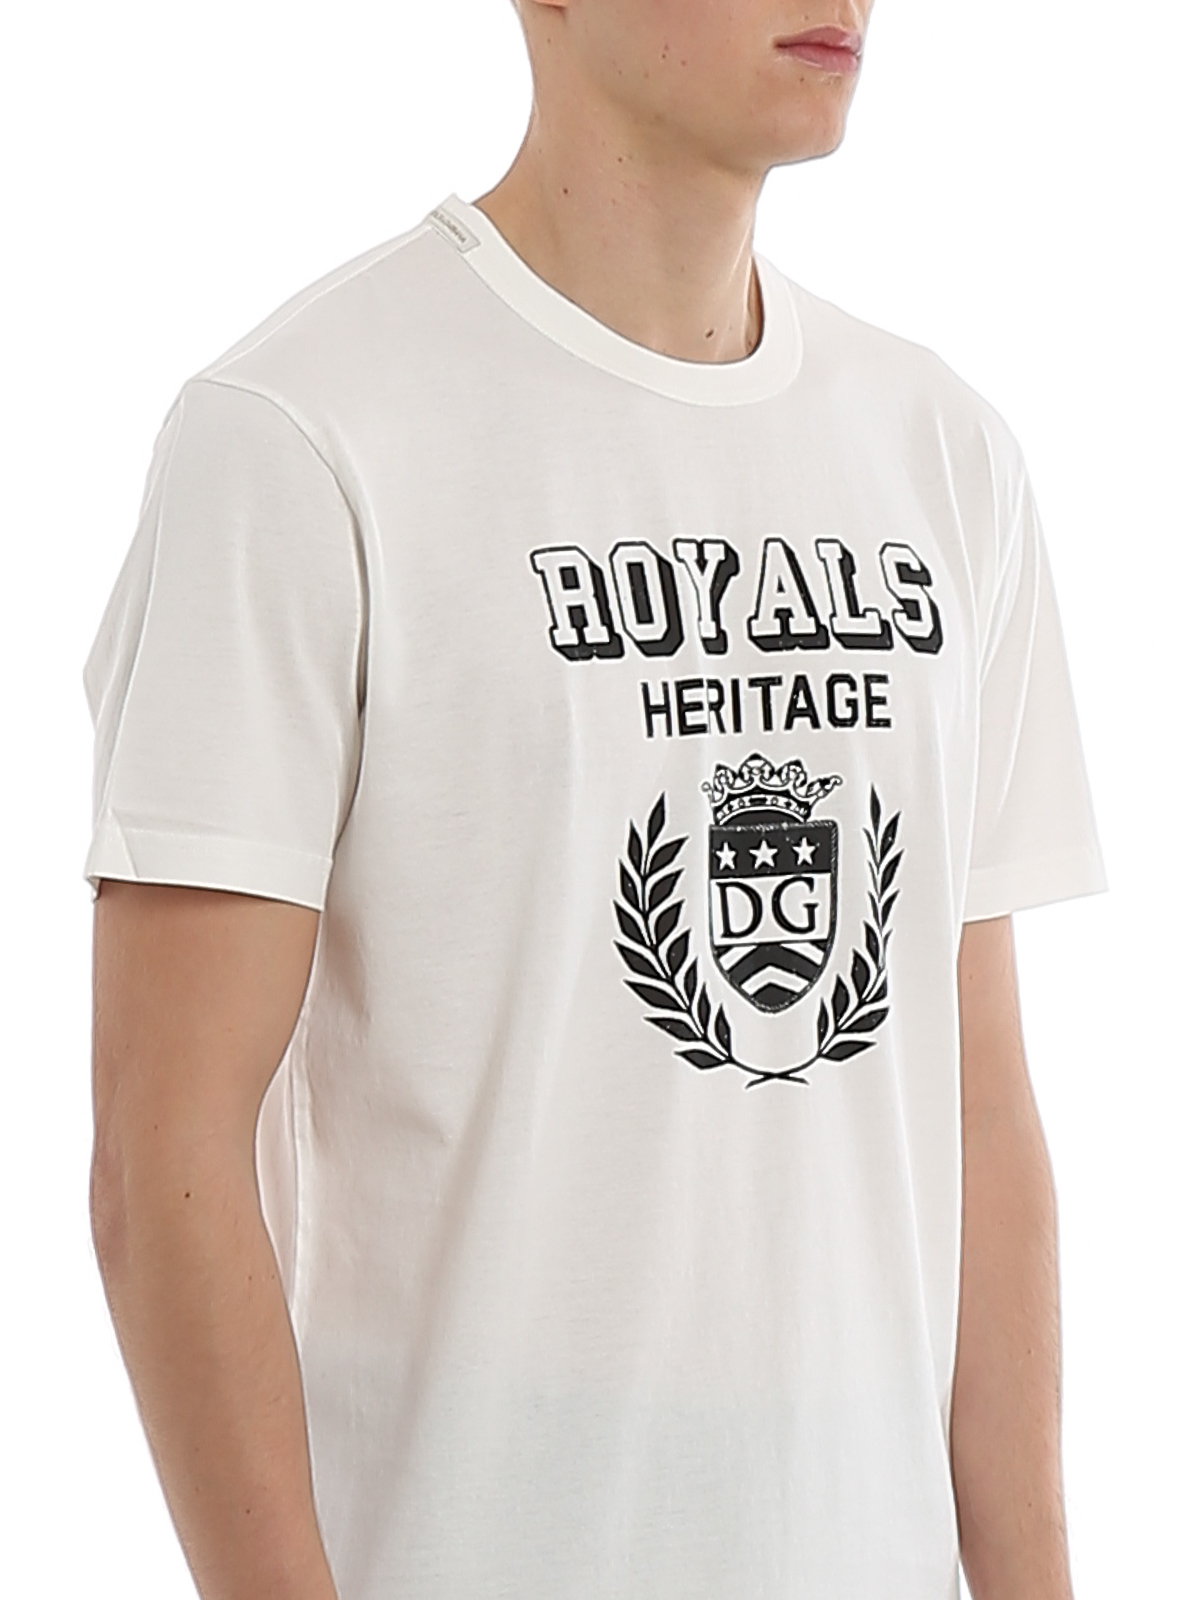 where to buy royals shirts